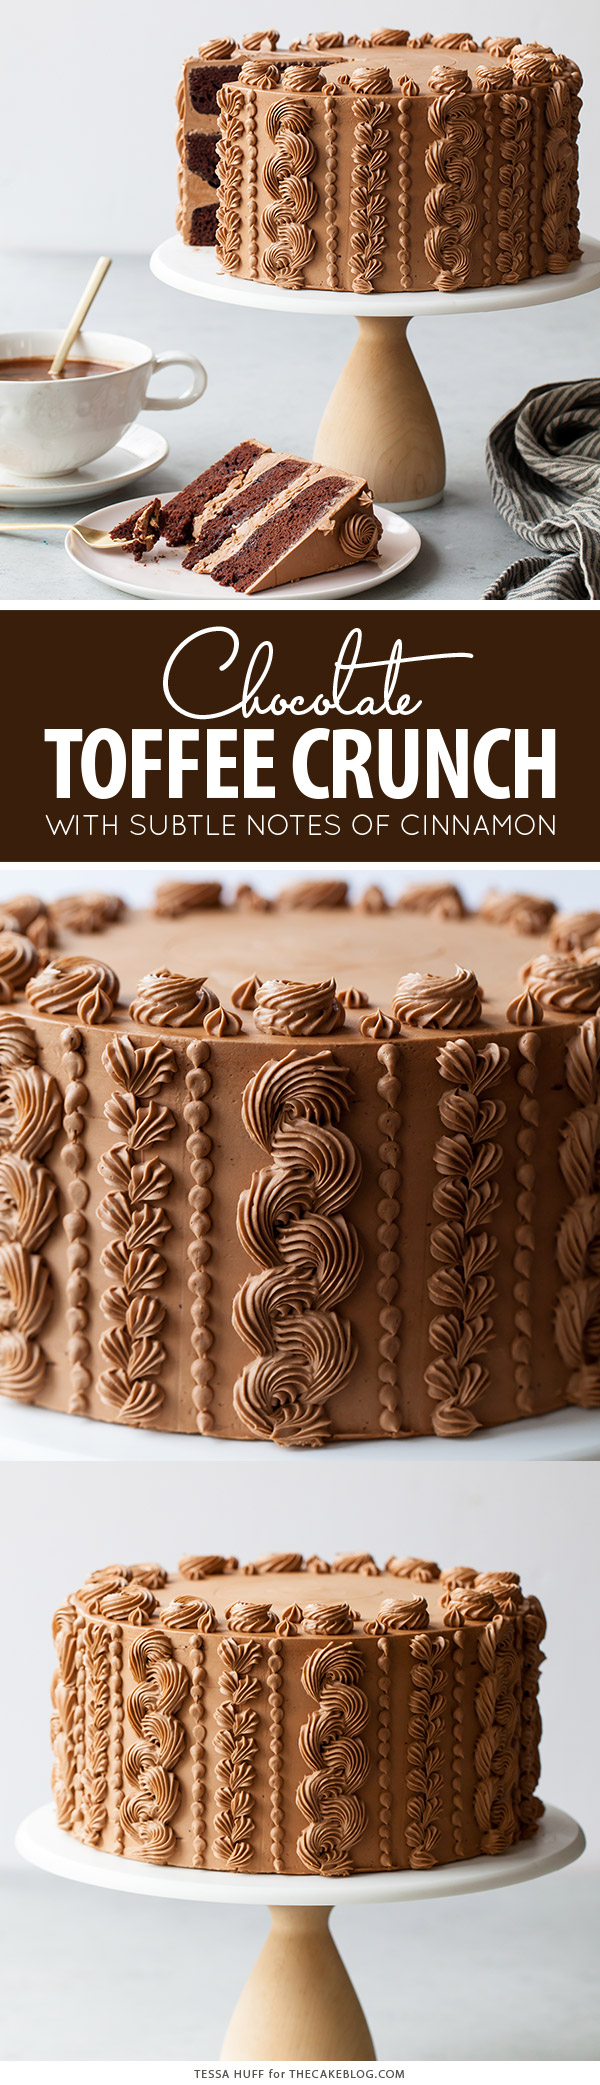 Chocolate Toffee Crunch Cake   The Cake Blog